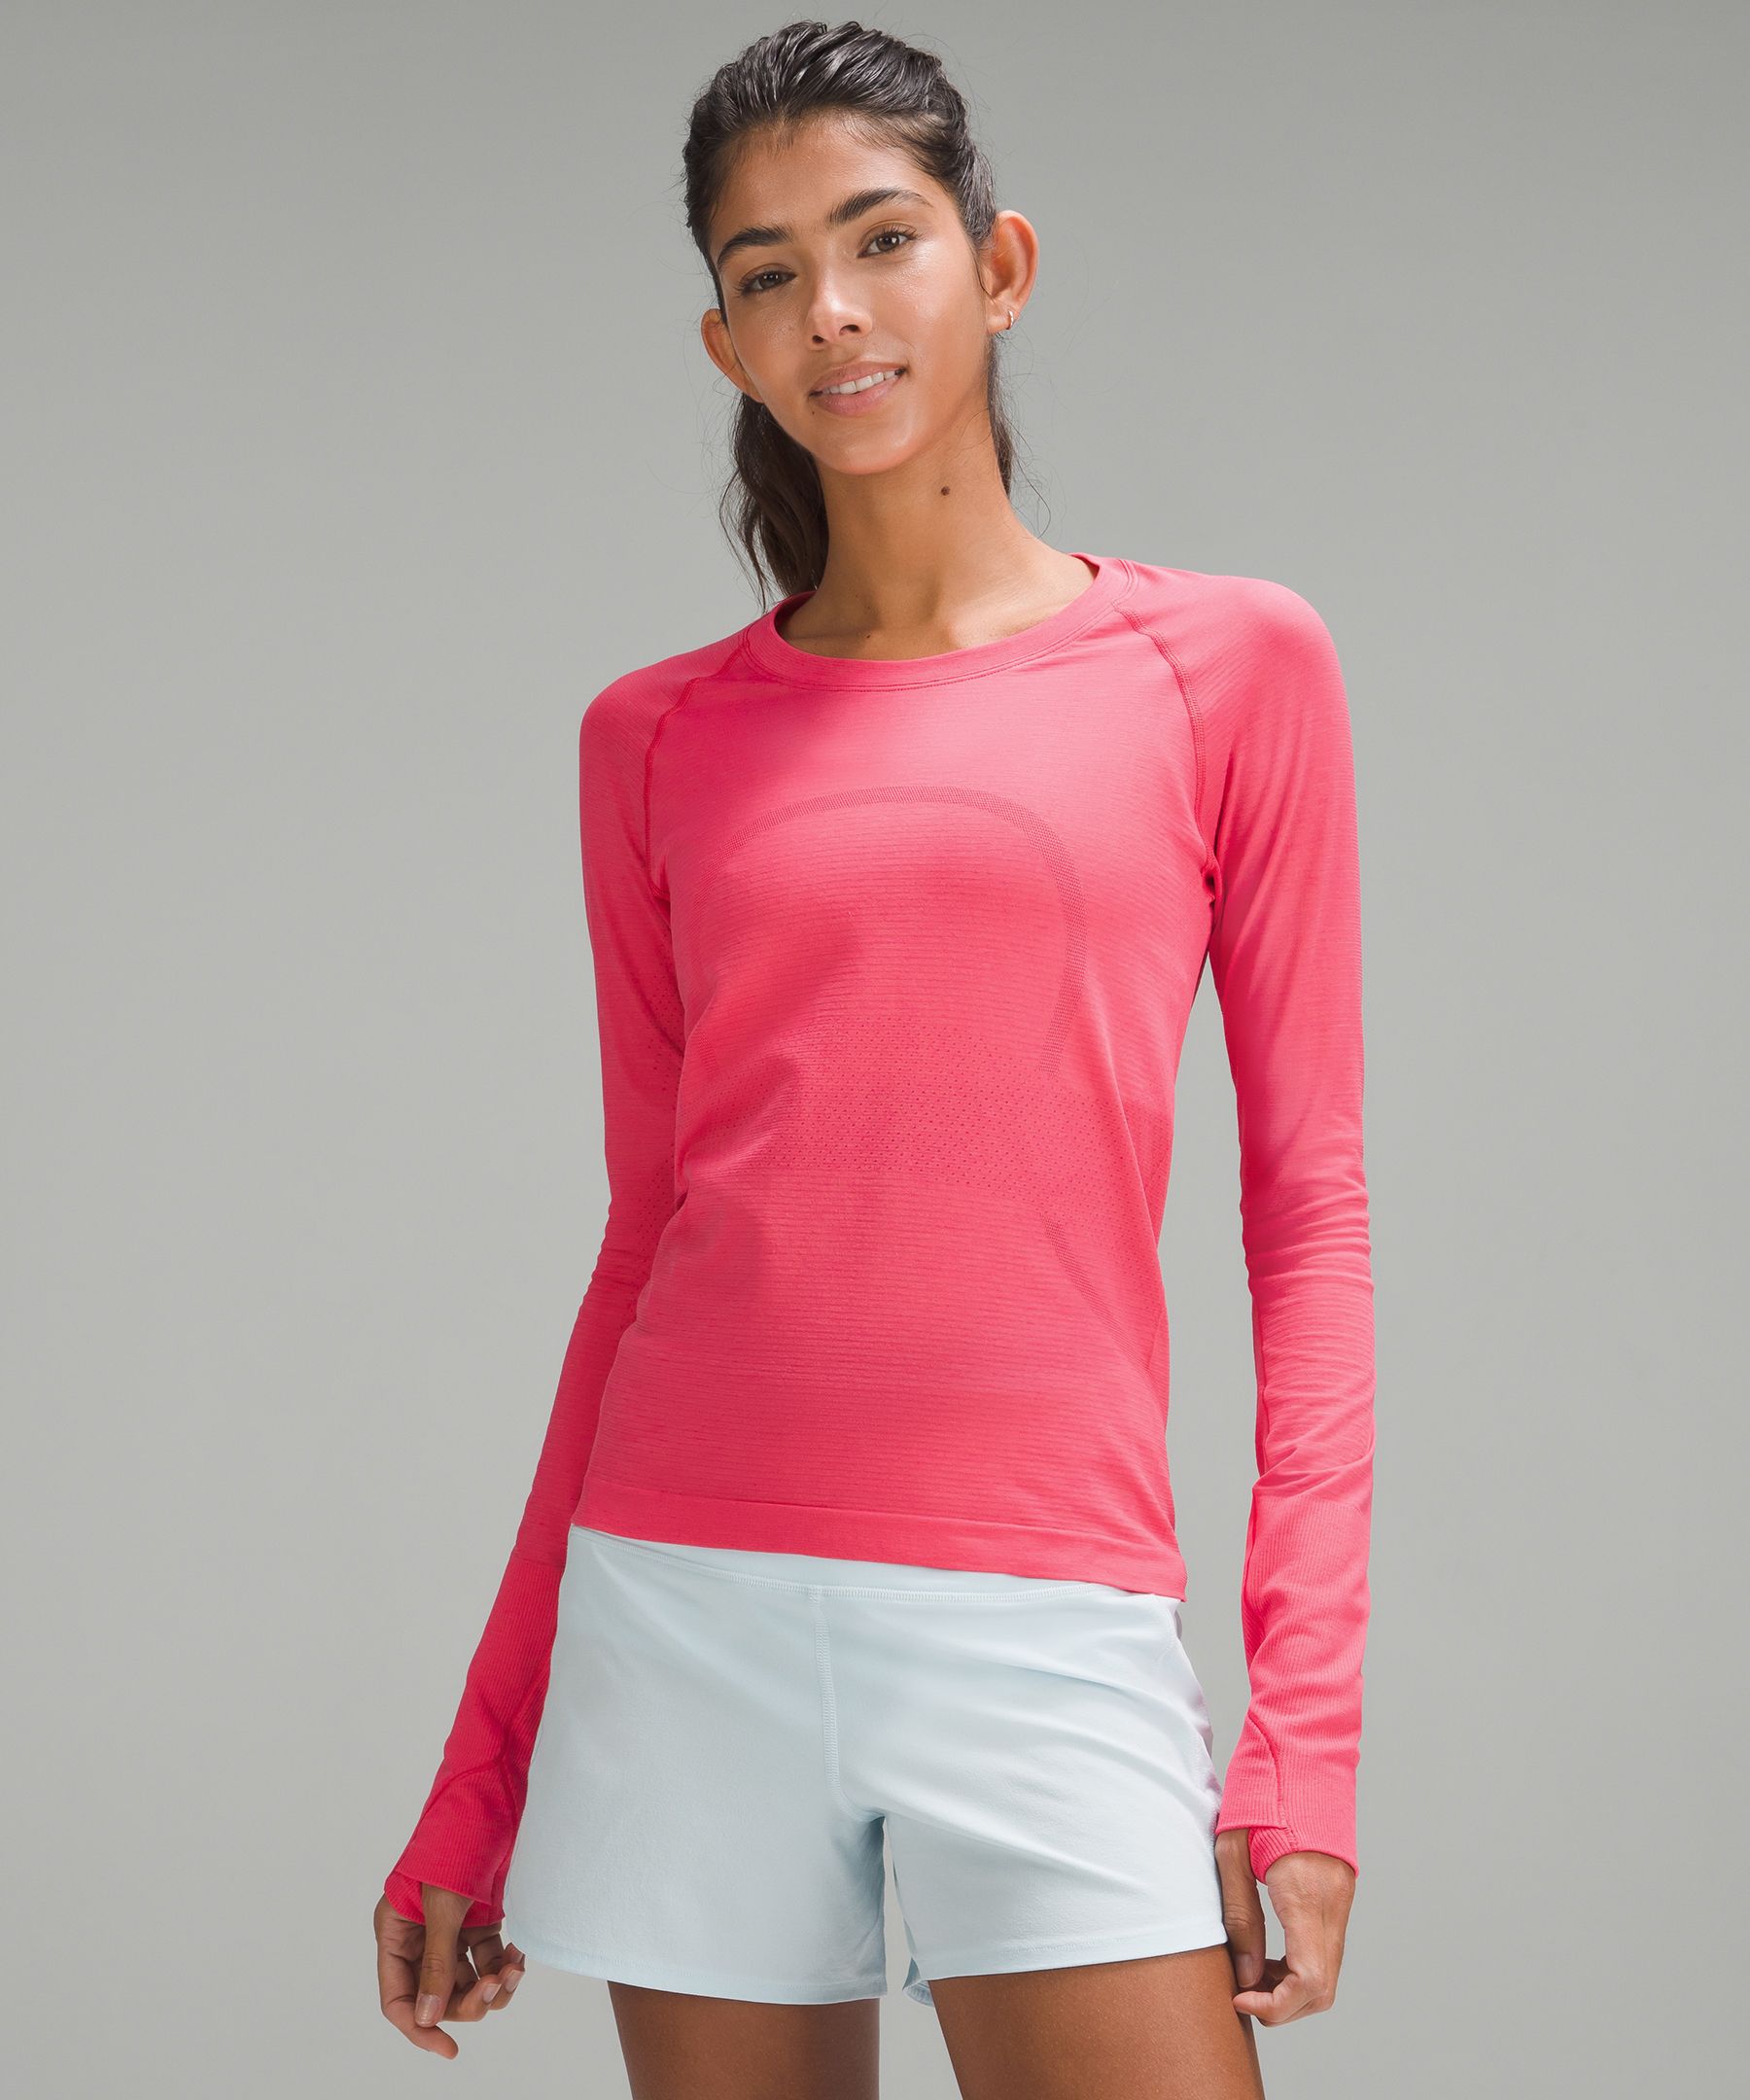 NWT Lululemon Swiftly Tech Long Sleeve Shirt 2.0 Multi Colors and Sizes